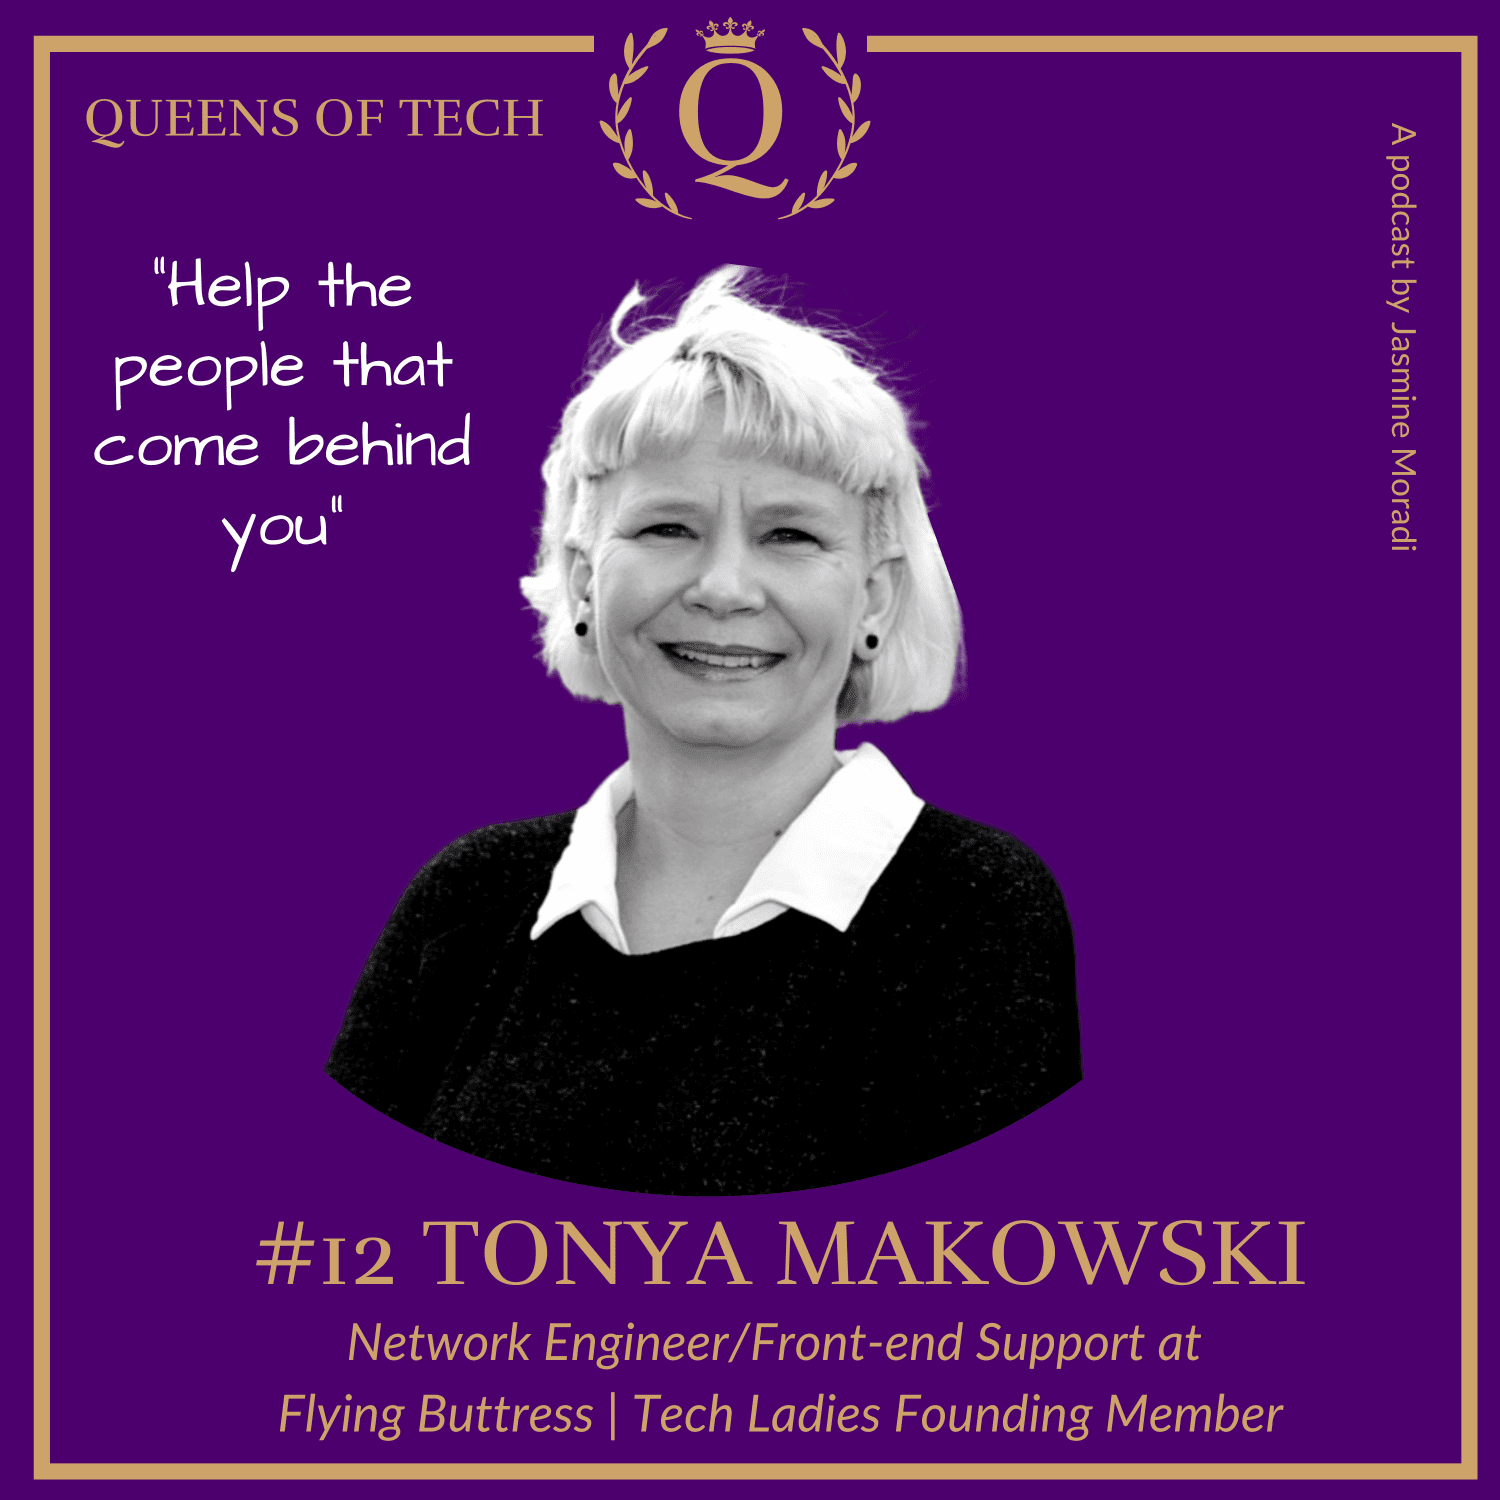 Queens of Tech-Tonya Makowski - Network Engineer-Queens-of-tech-podcast